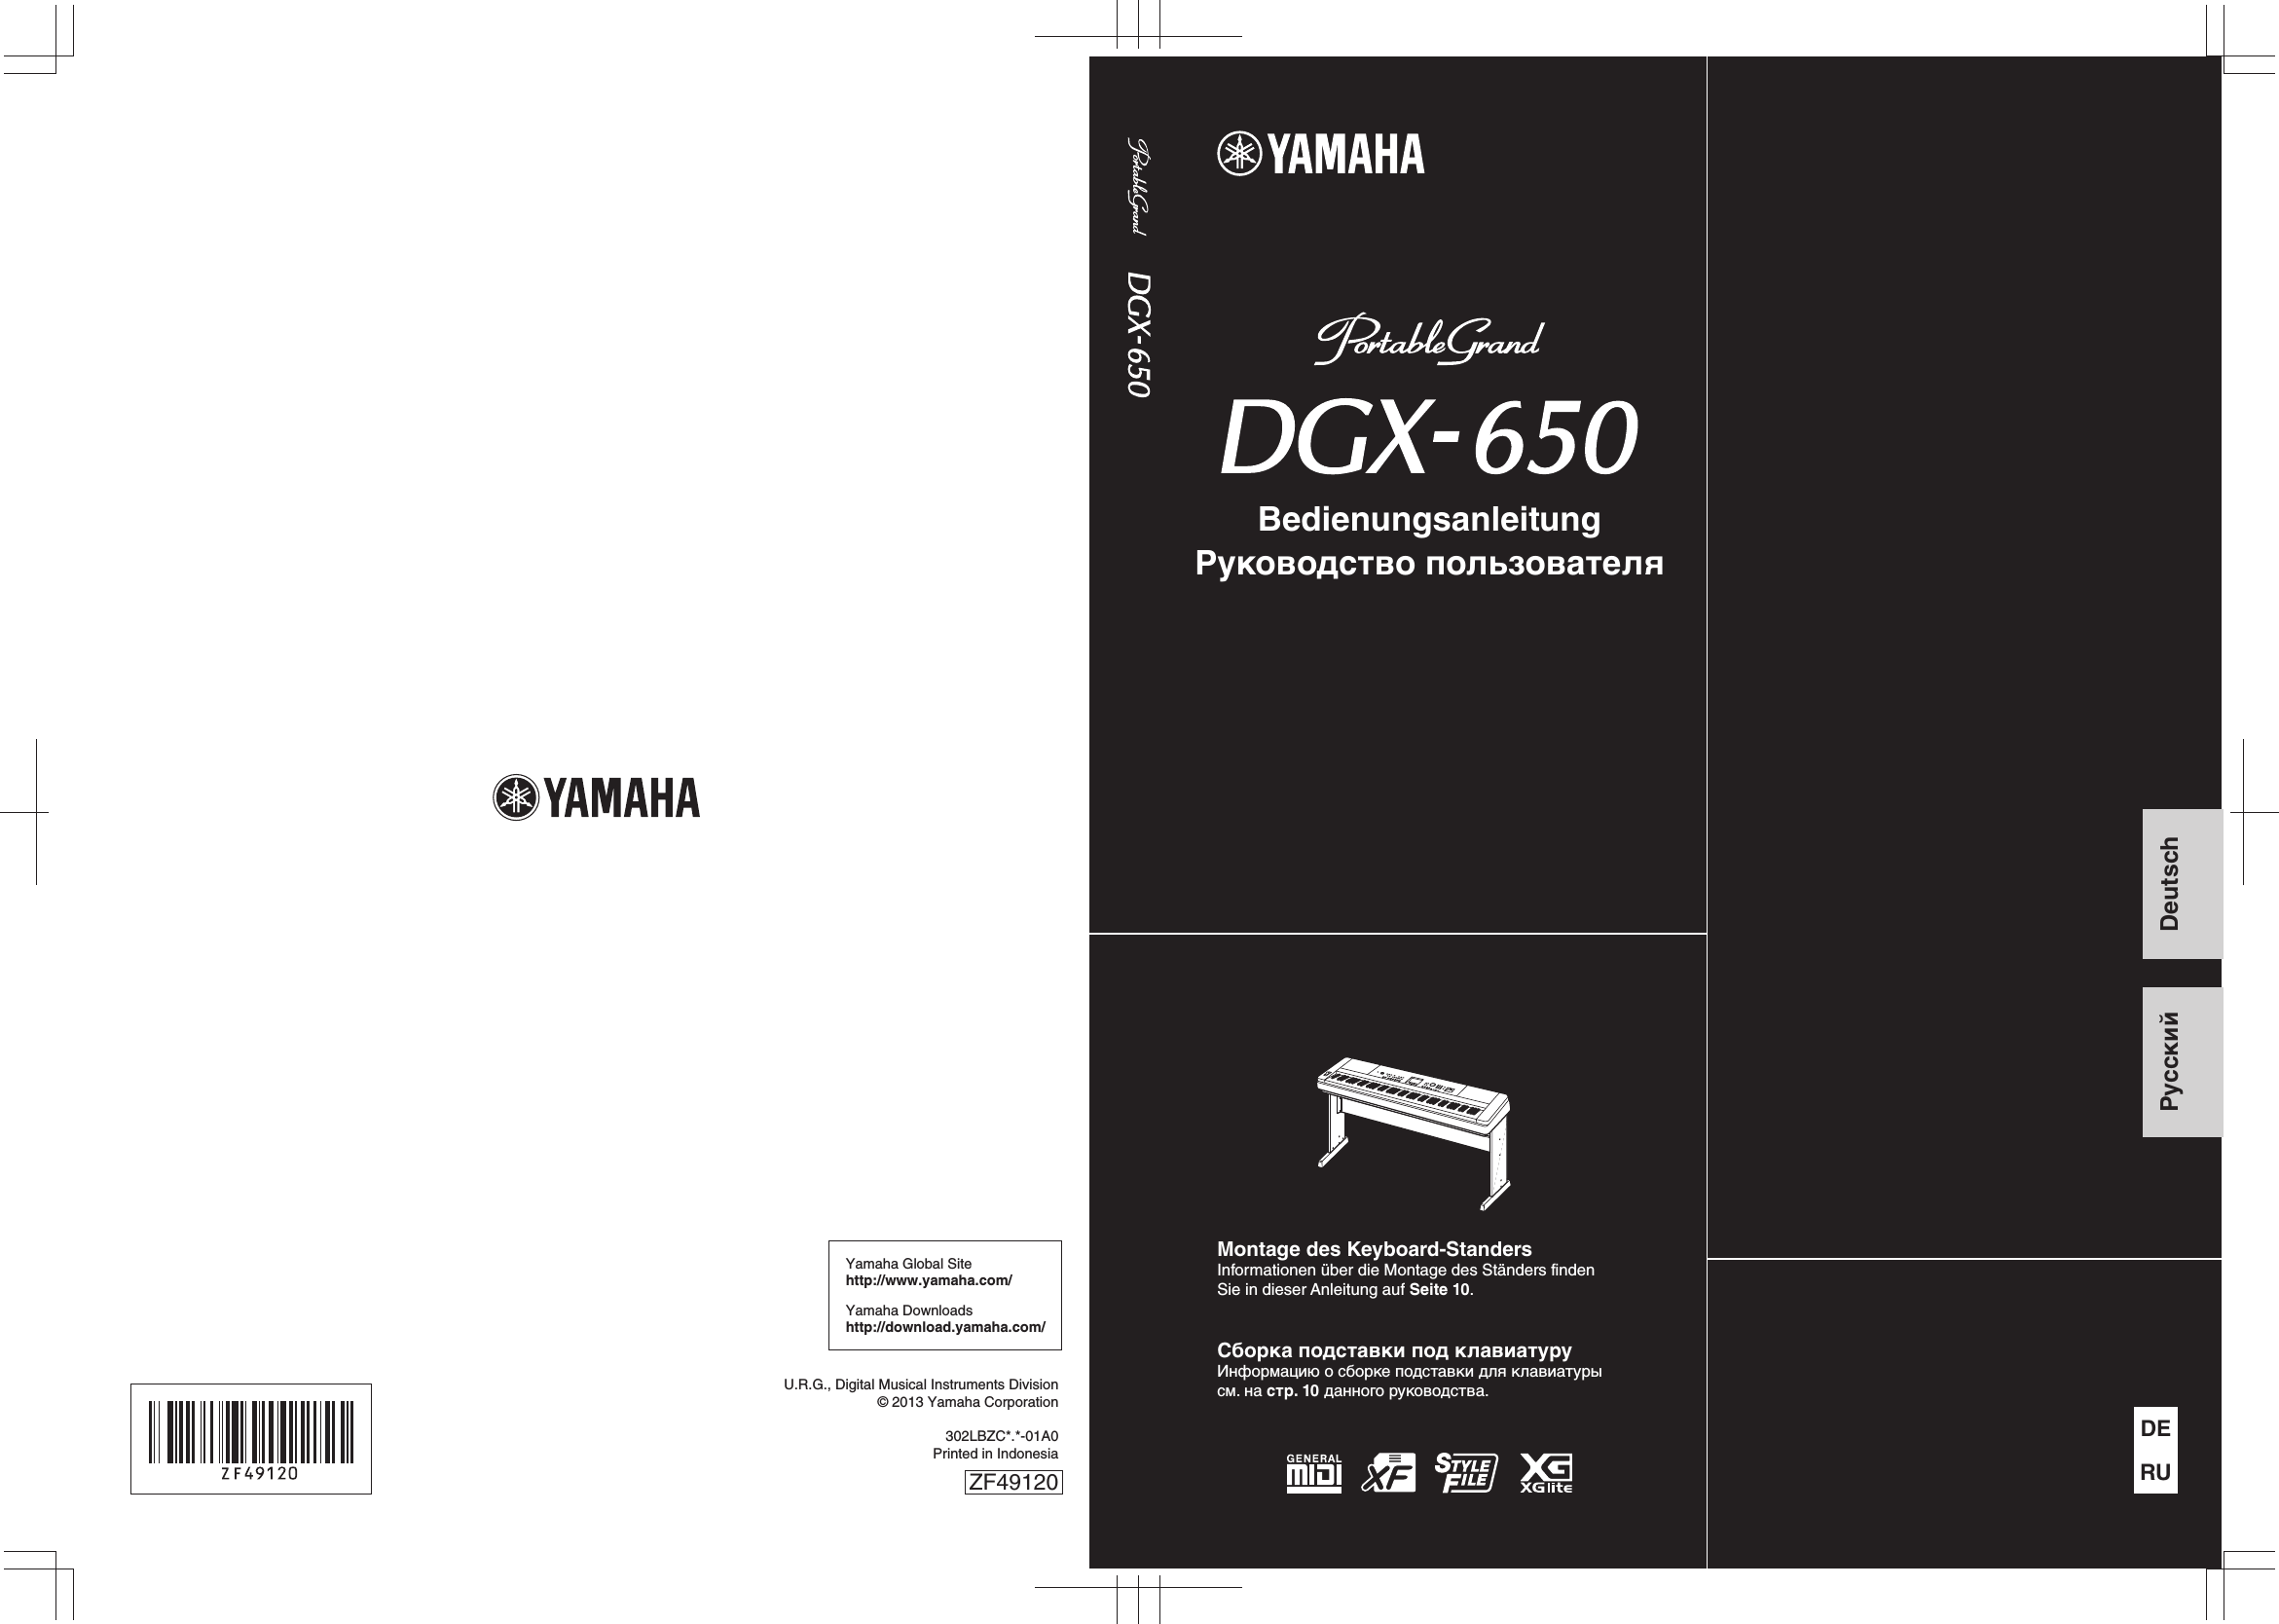 yamaha dgx 650 manual